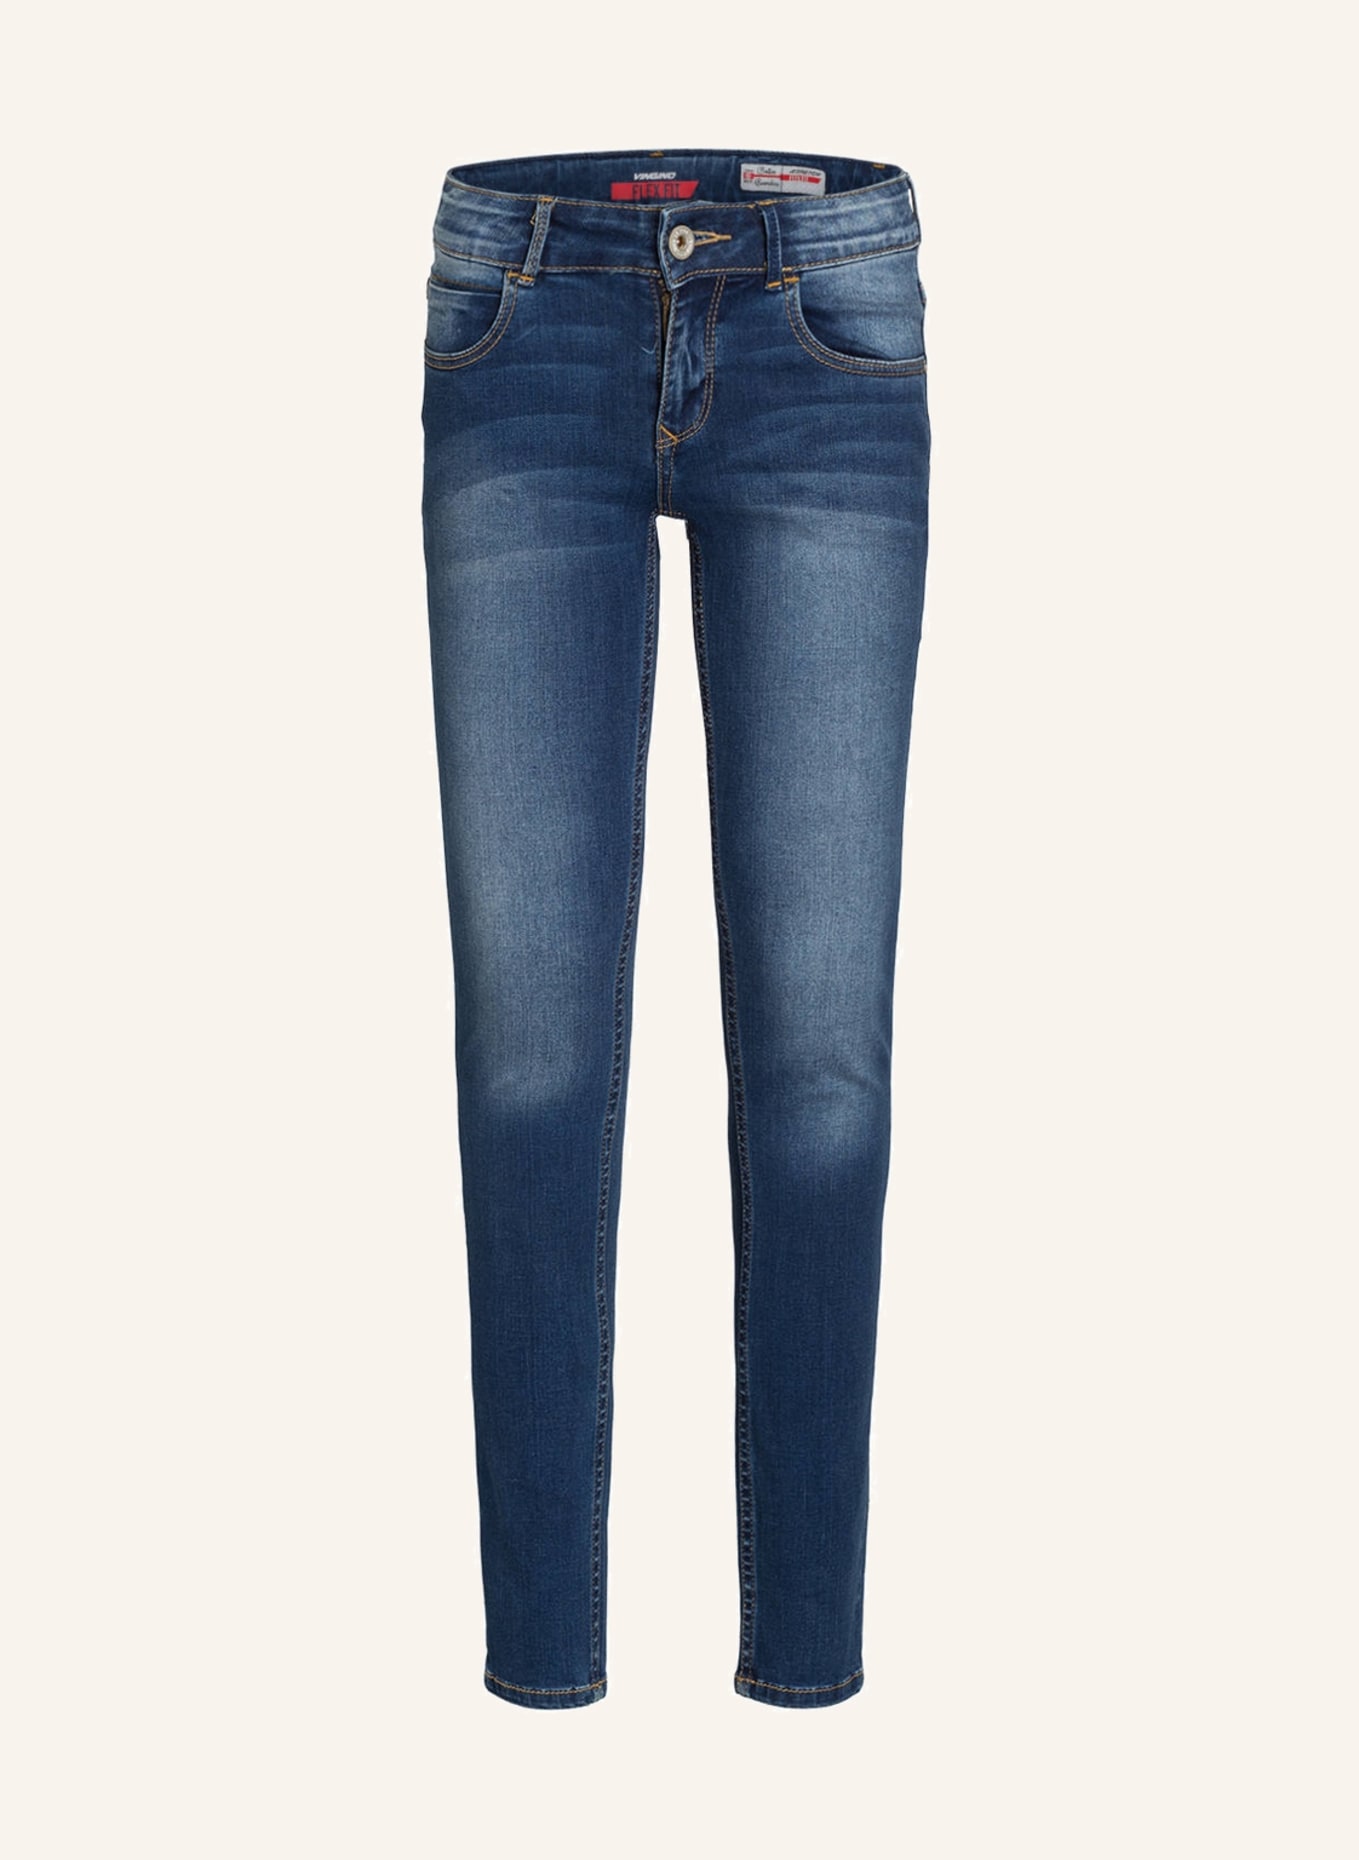 VINGINO Jeans BETTINE Flex Fit, Farbe: DARK USED (Bild 1)